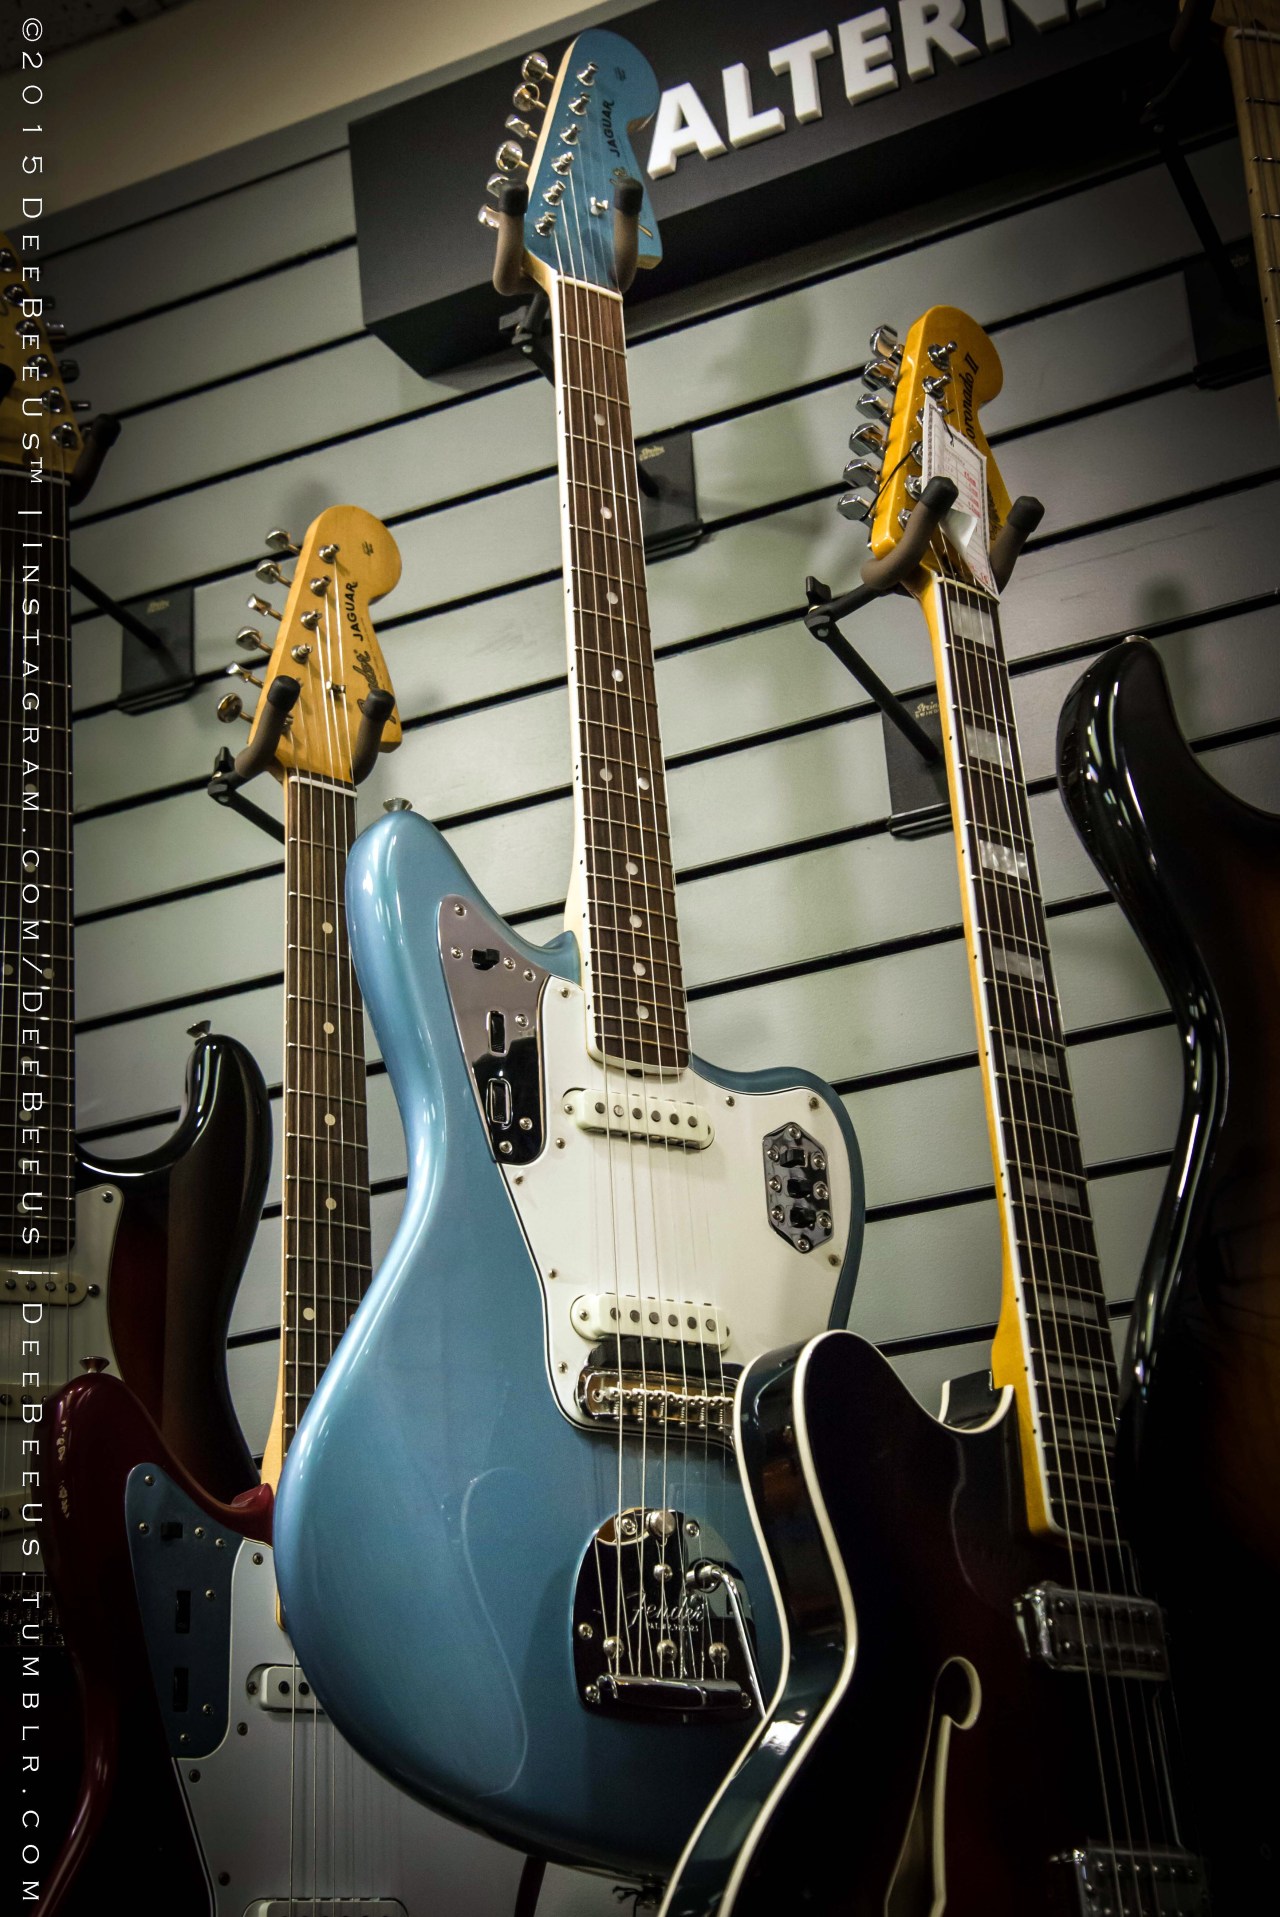 deebeeus:More guitar shopping  this week in Toronto, Canada:1) Gibson Custom Trini